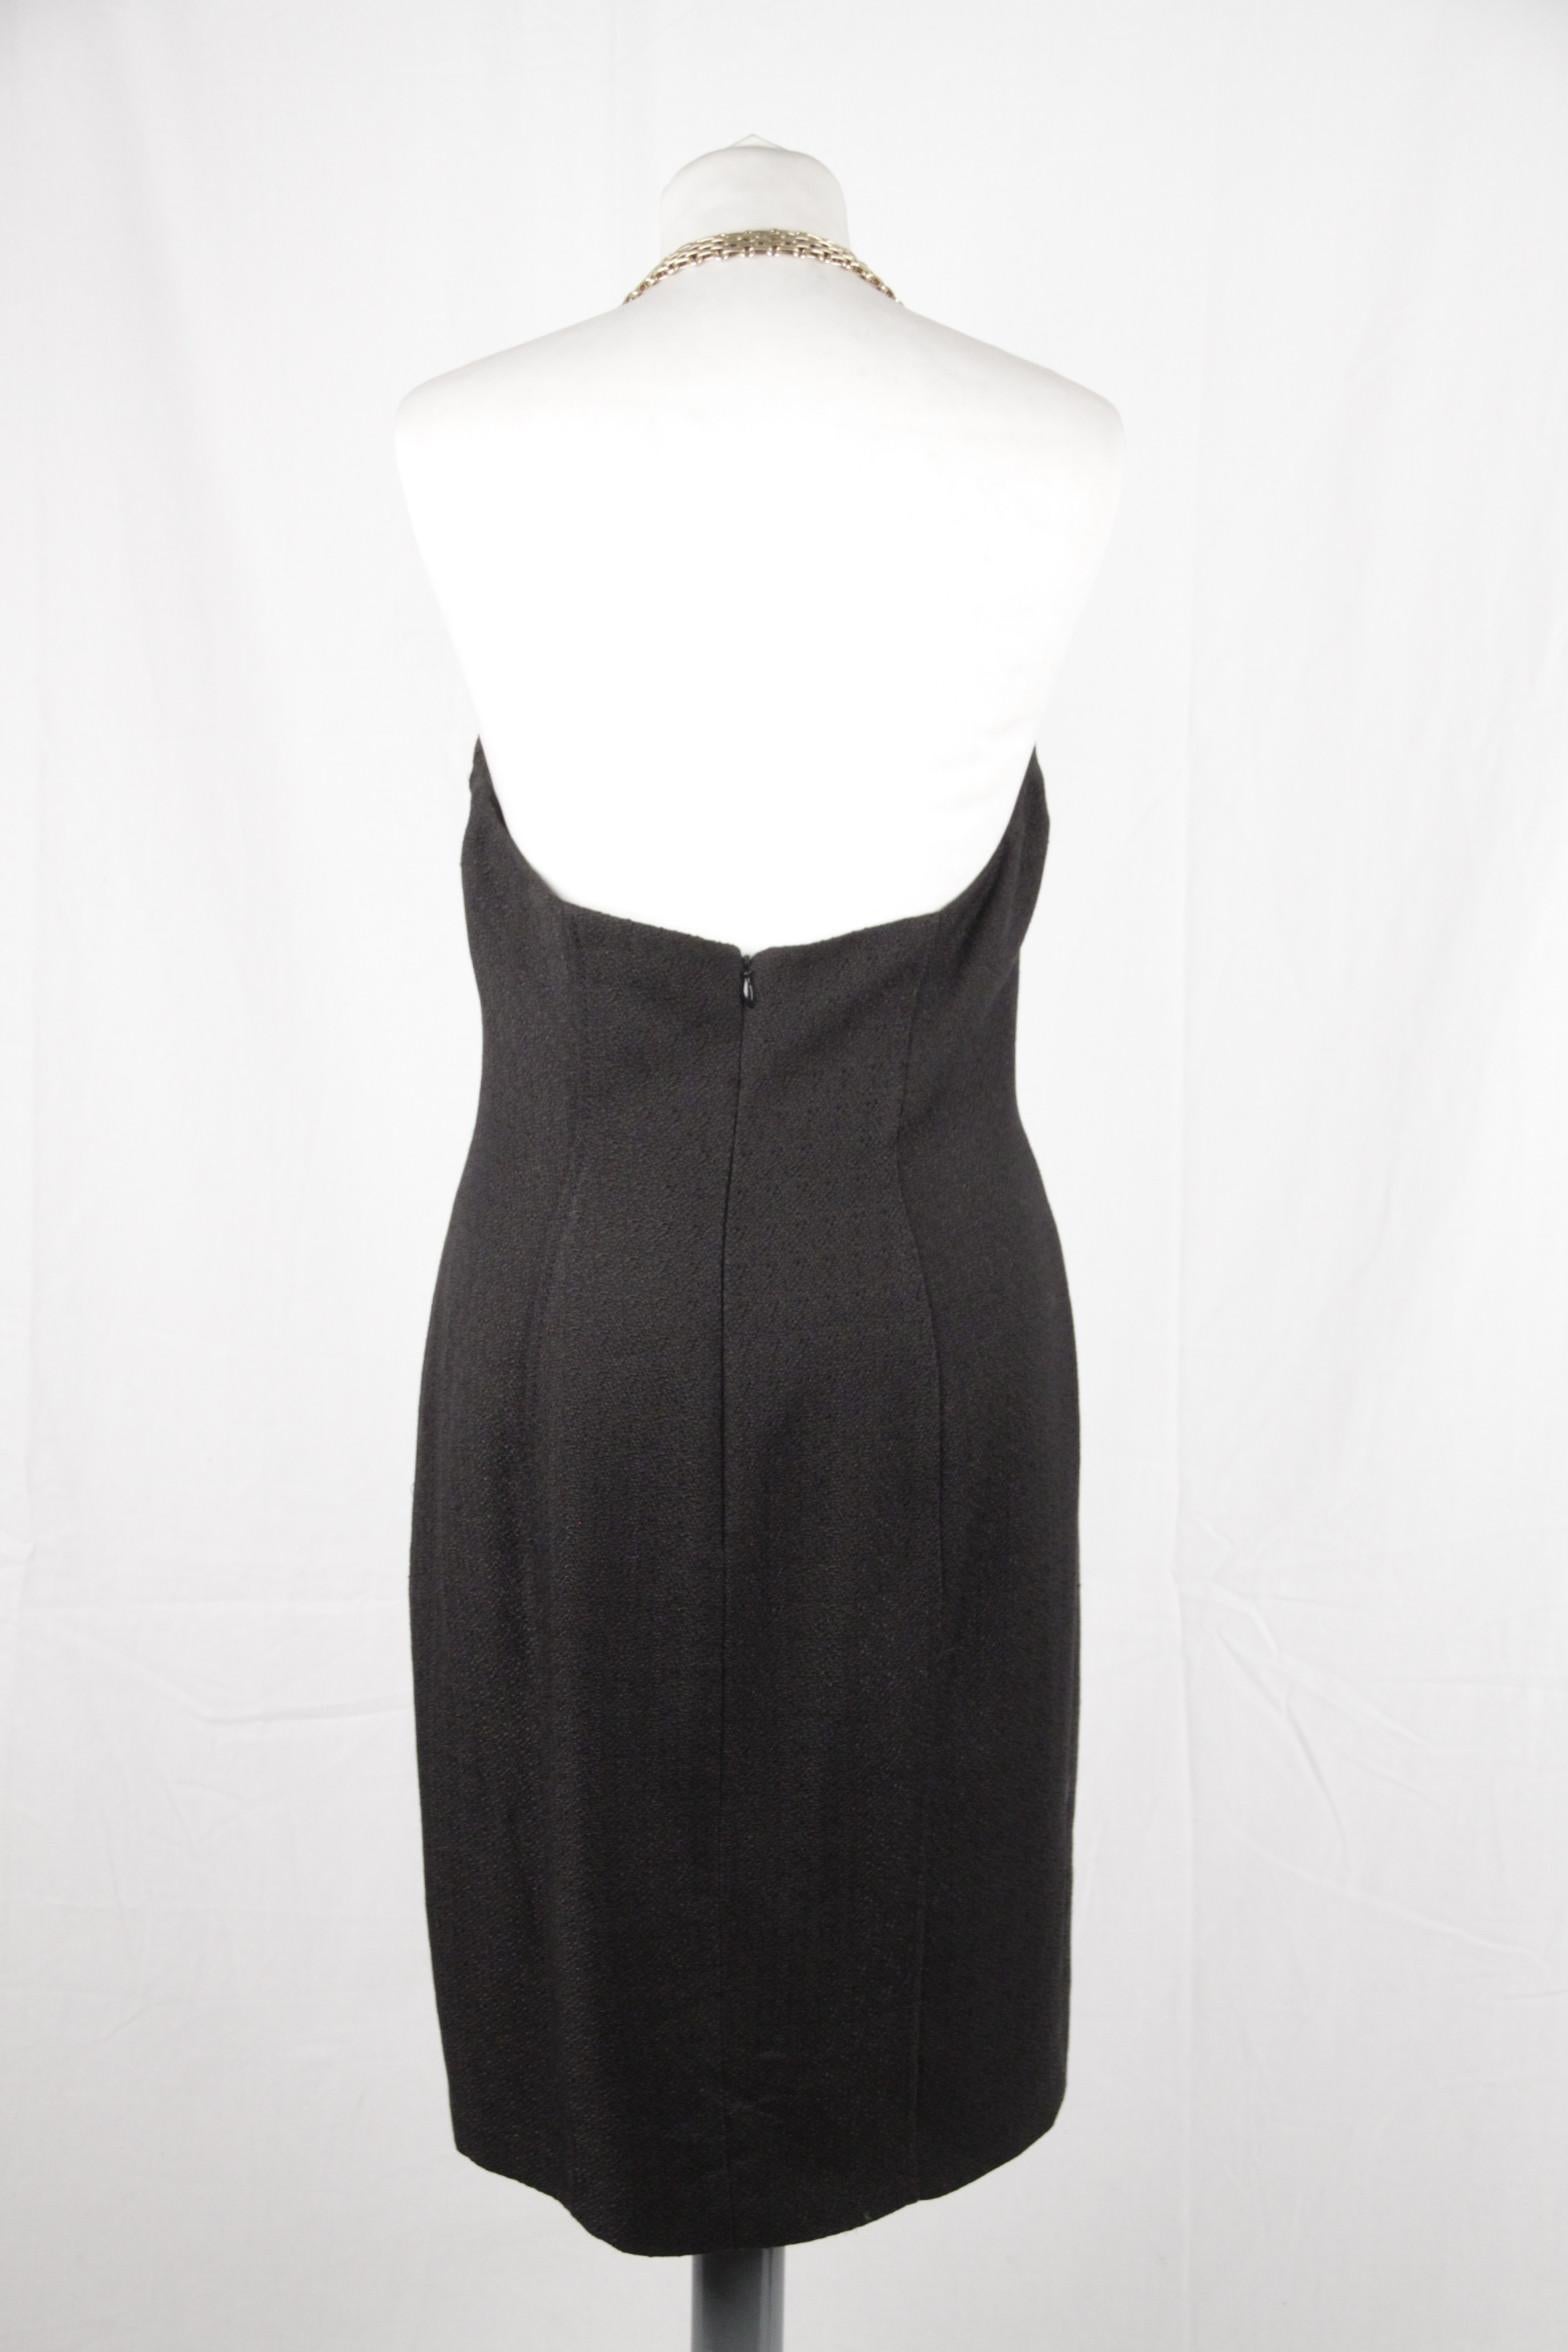 Versace Black Cotton Blend Halterneck dress with chain Strap Size 42 1